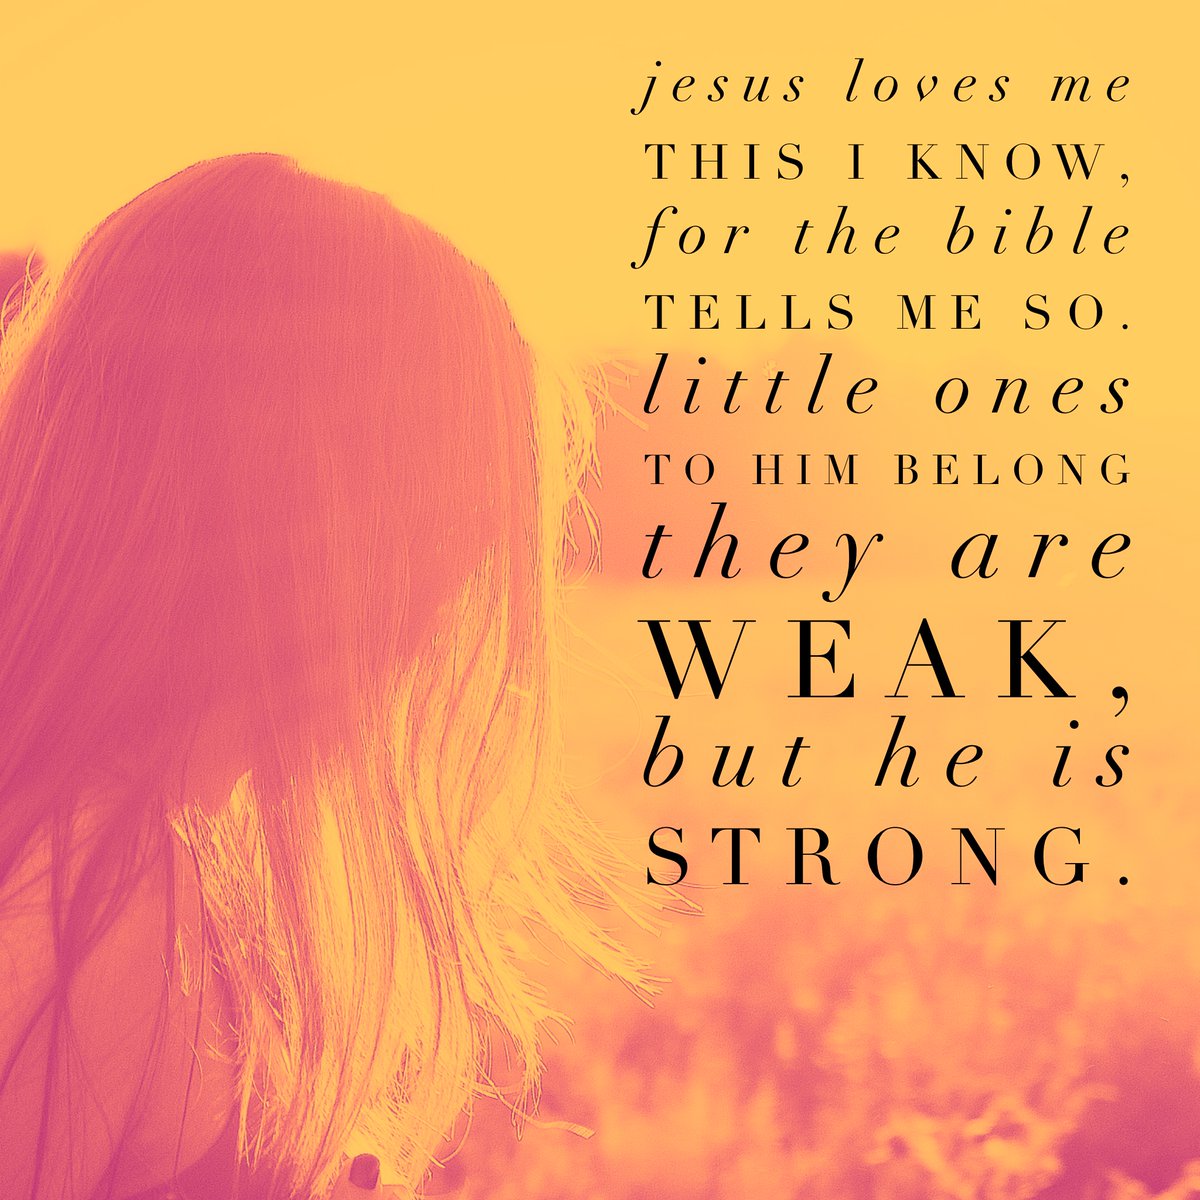 Yes, Jesus loves me. ⁣
The Bible tells me so. ⁣
⁣
#mahalokeakua #Heismystrength #ohanachurch #faithlikeachild #readyourbible